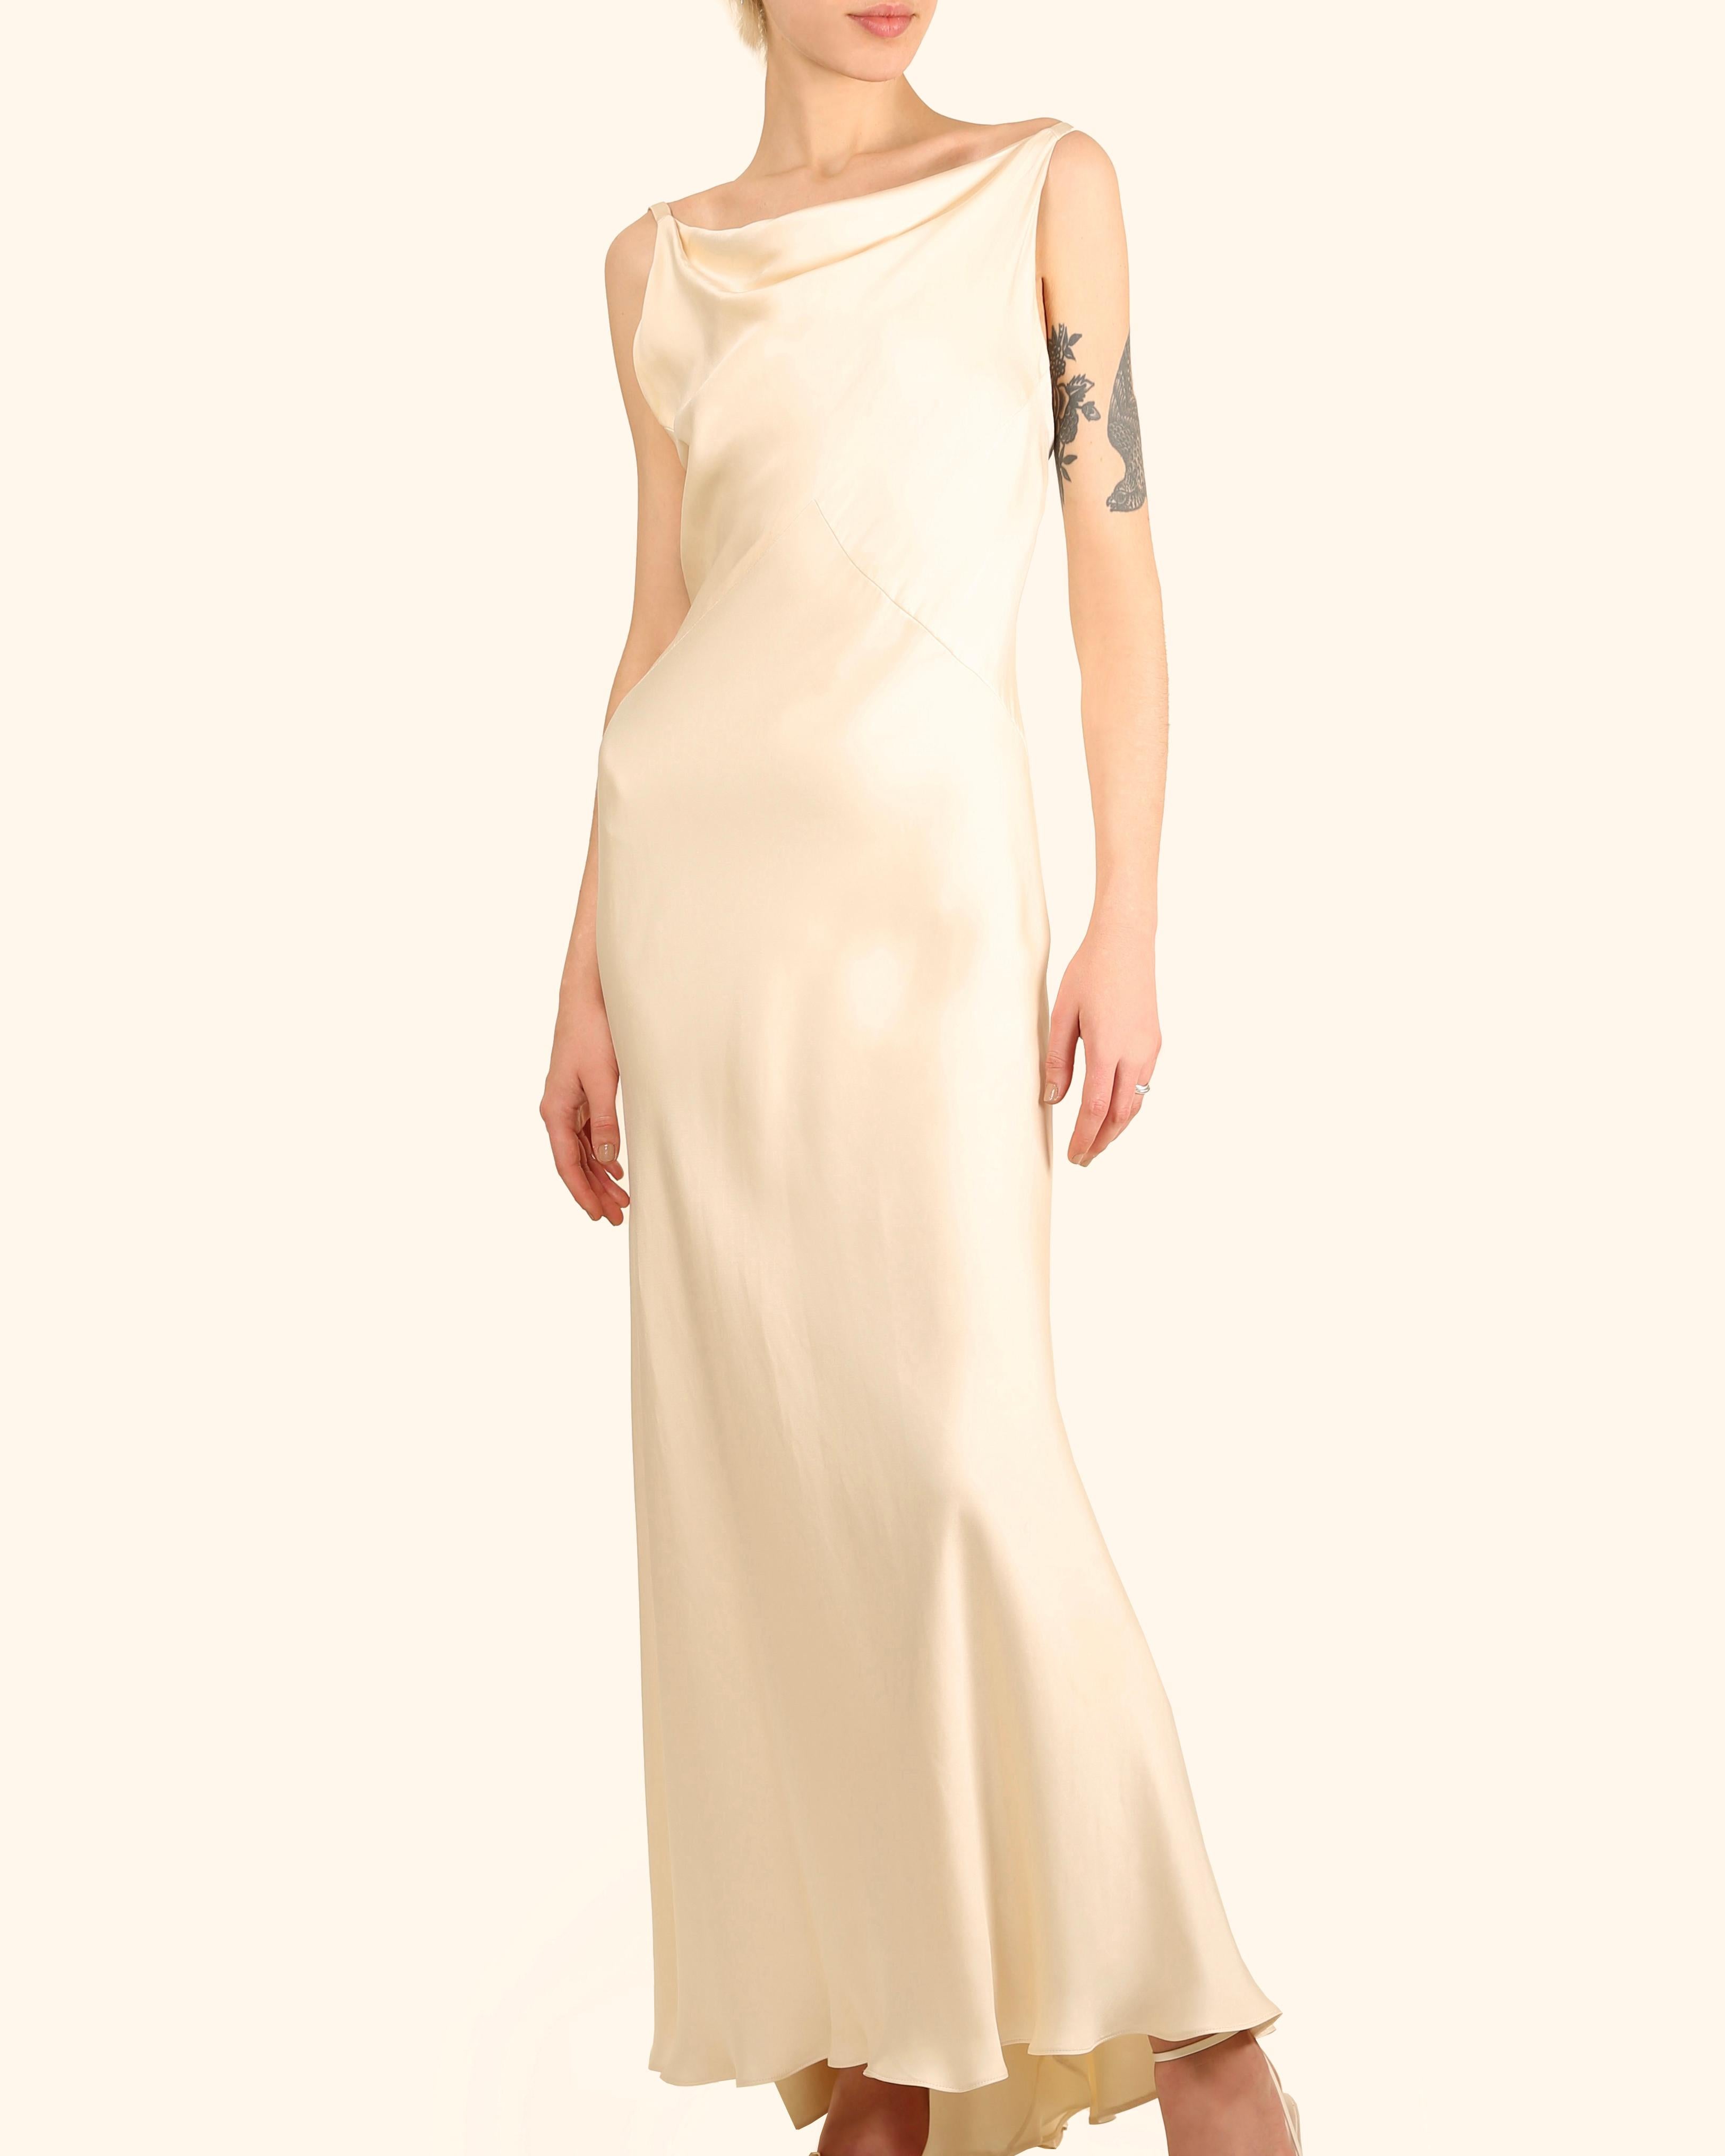 Ralph Lauren champagne bias cut backless silk slip style backless gown dress 4